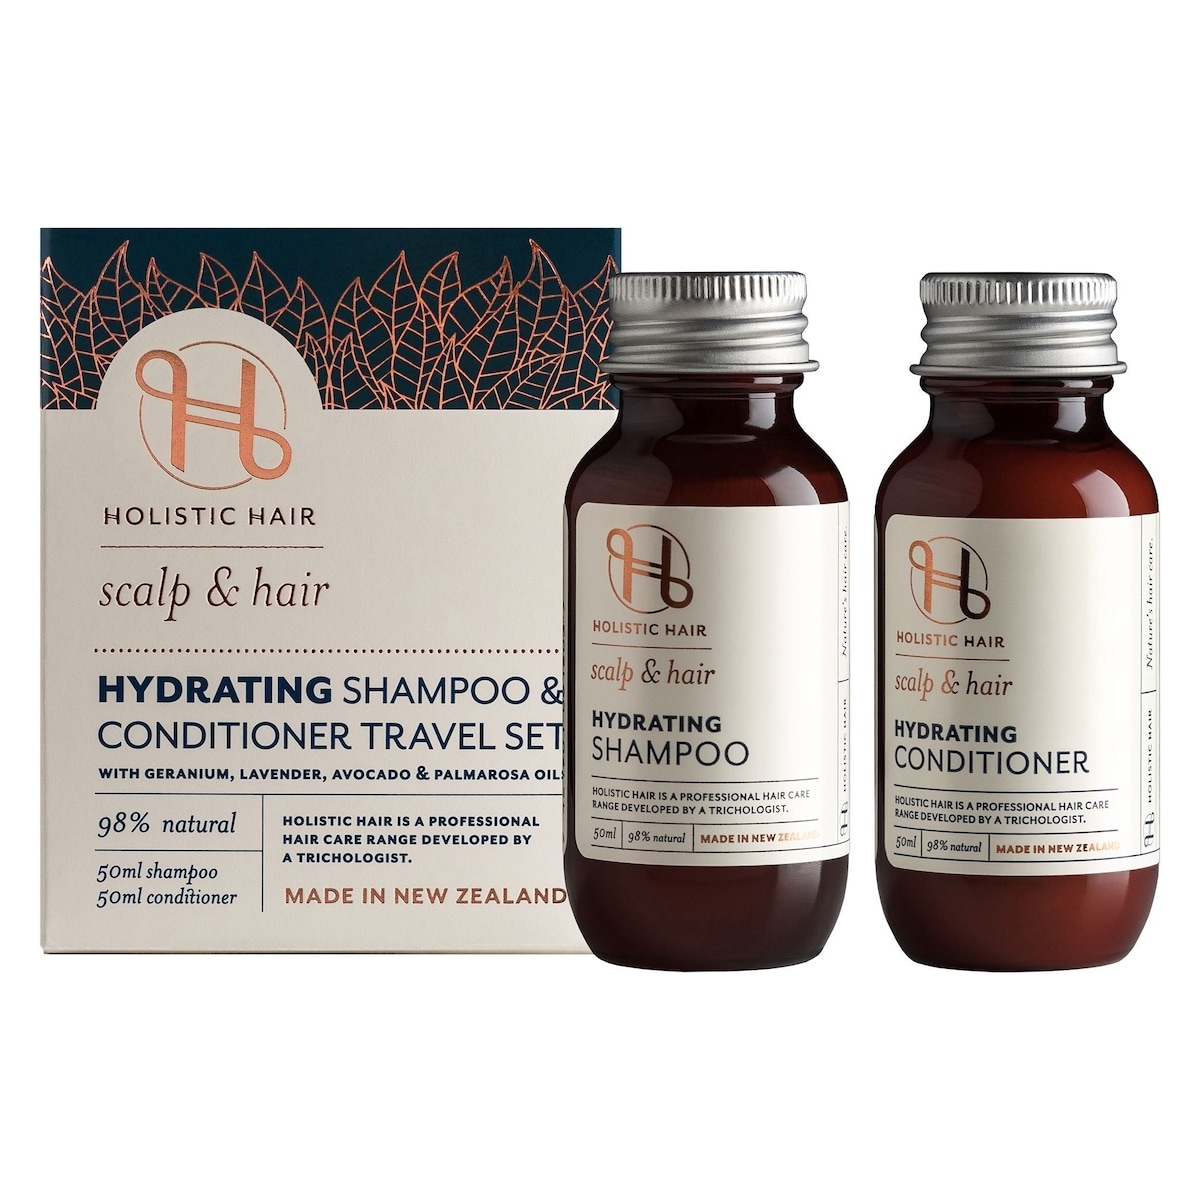 Holistic Hair Hydrating Shampoo & Conditioner Travel Set - 2x 50ml